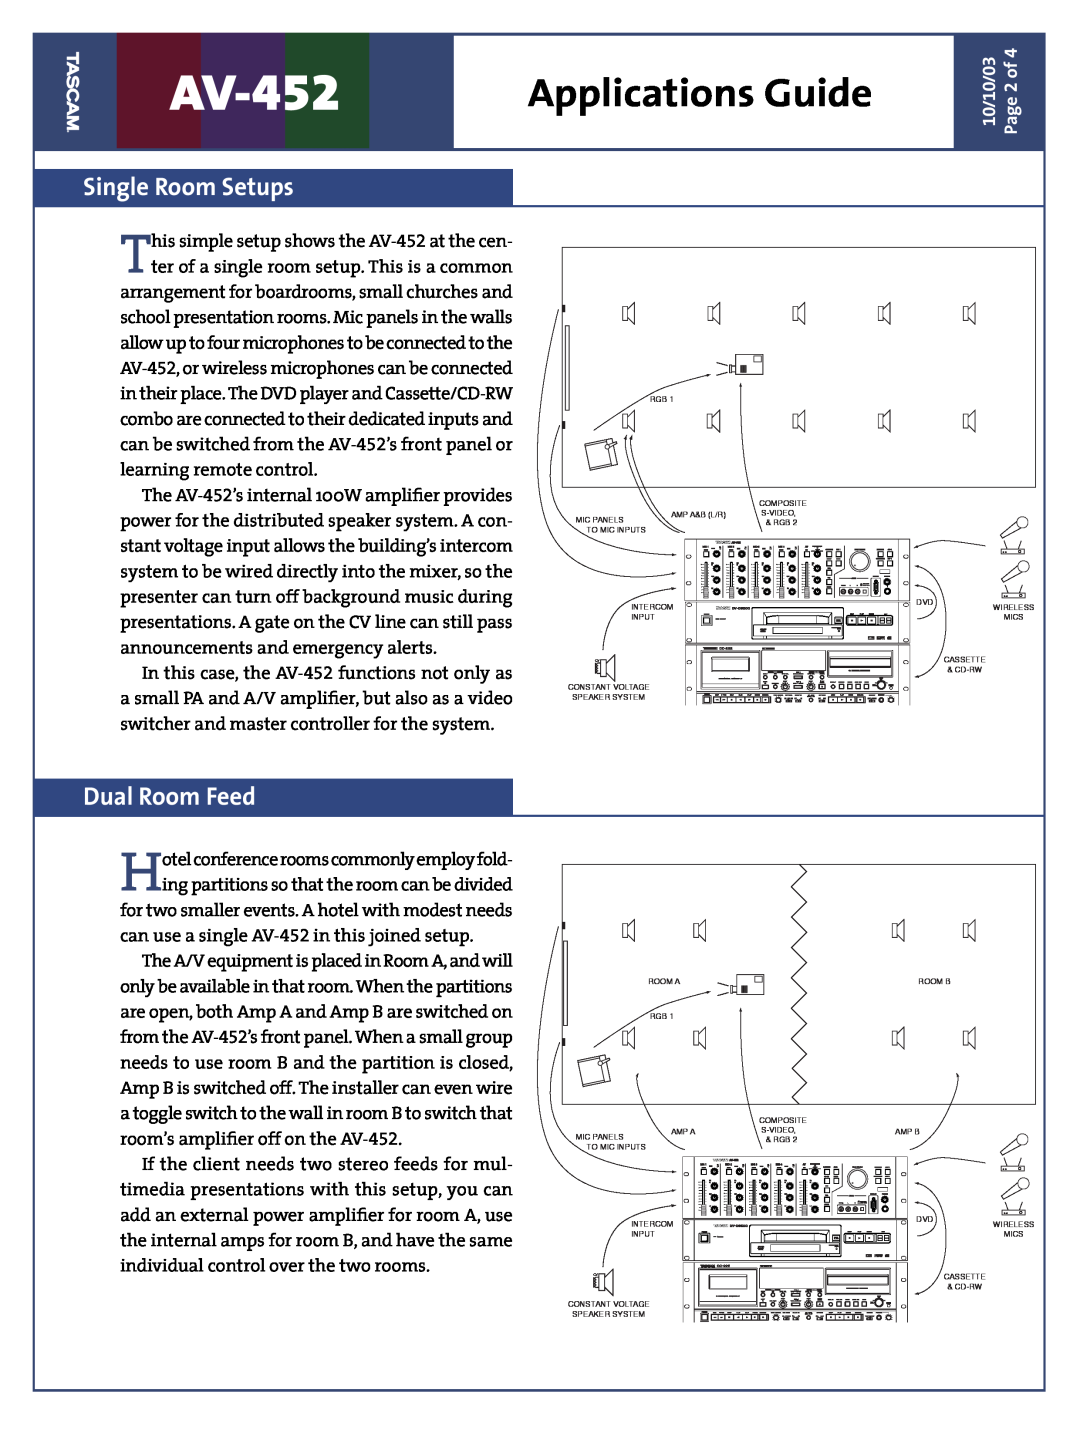 Tascam AV-452 manual Single Room Setups, Dual Room Feed, Applications Guide 